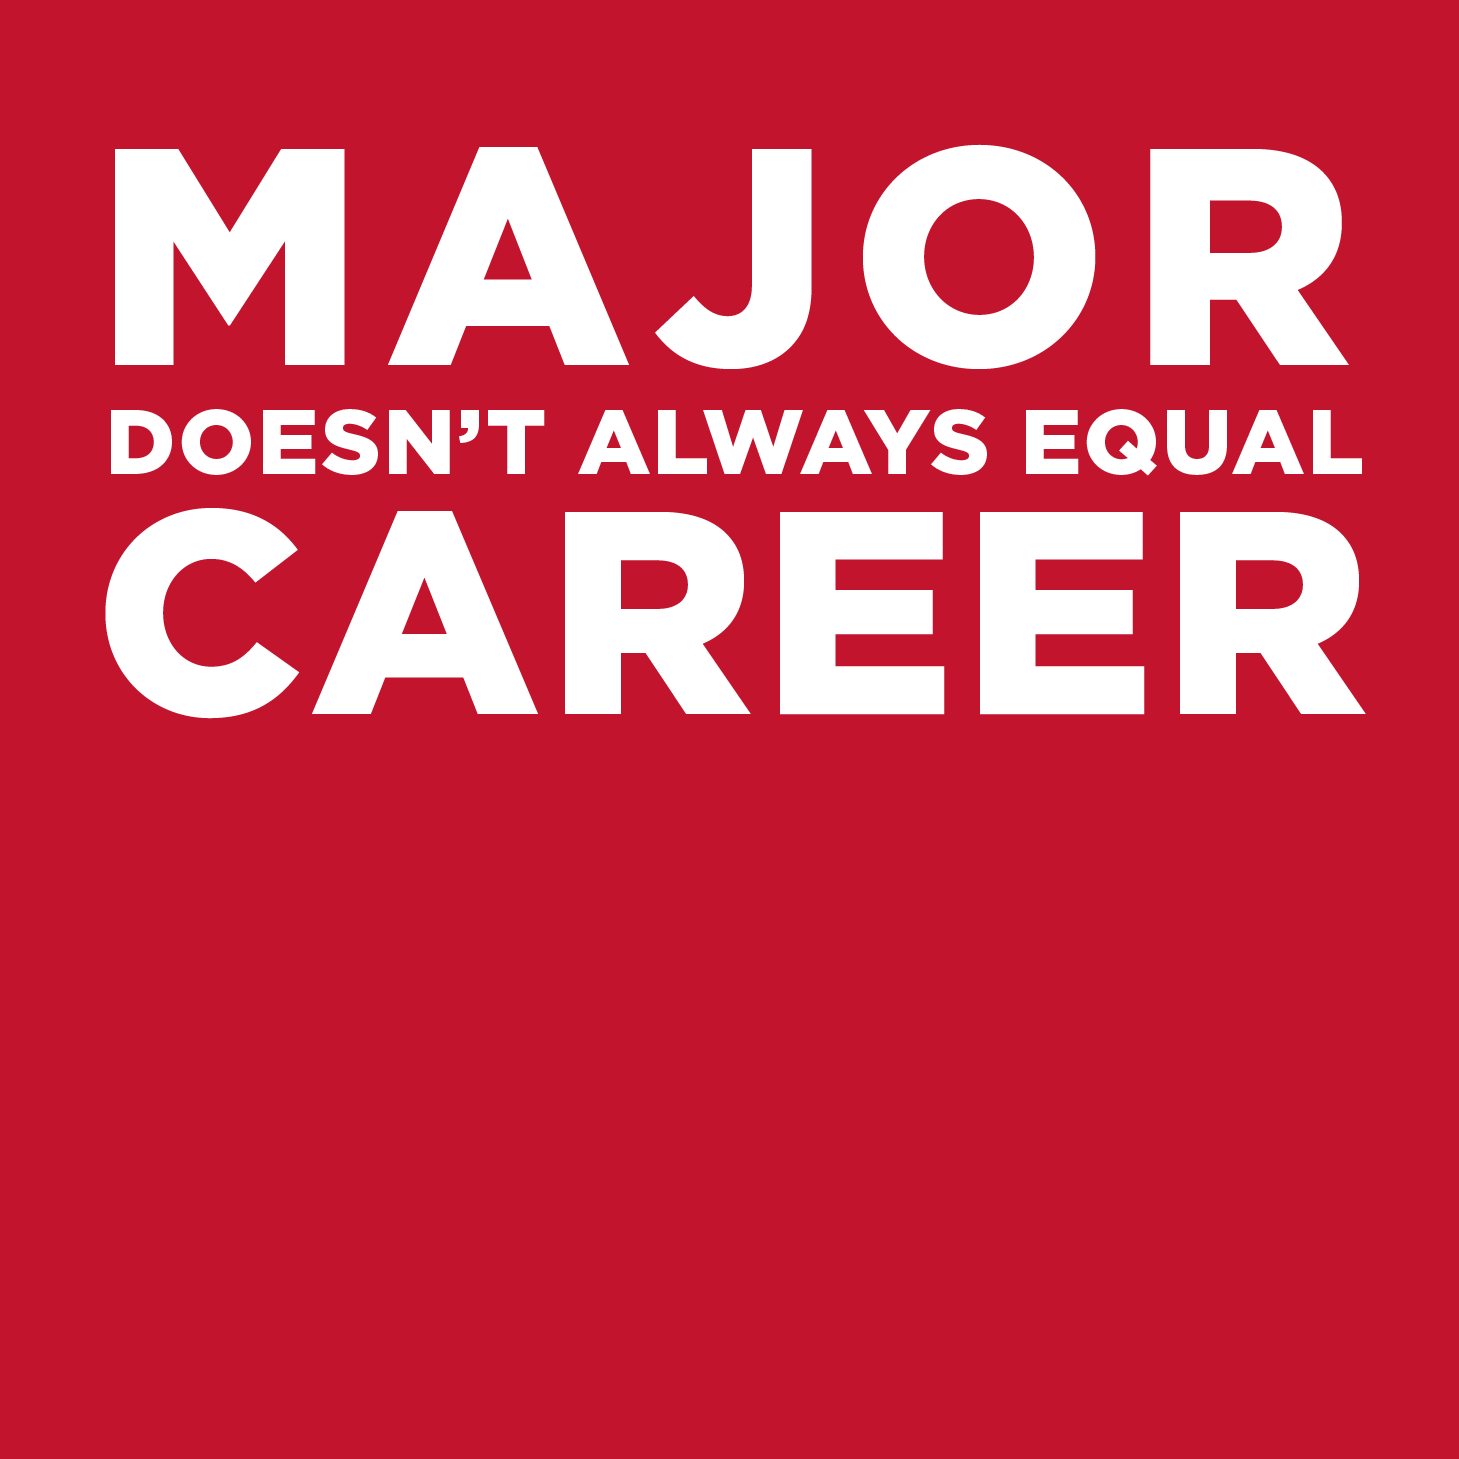 Major doesn't always equal career